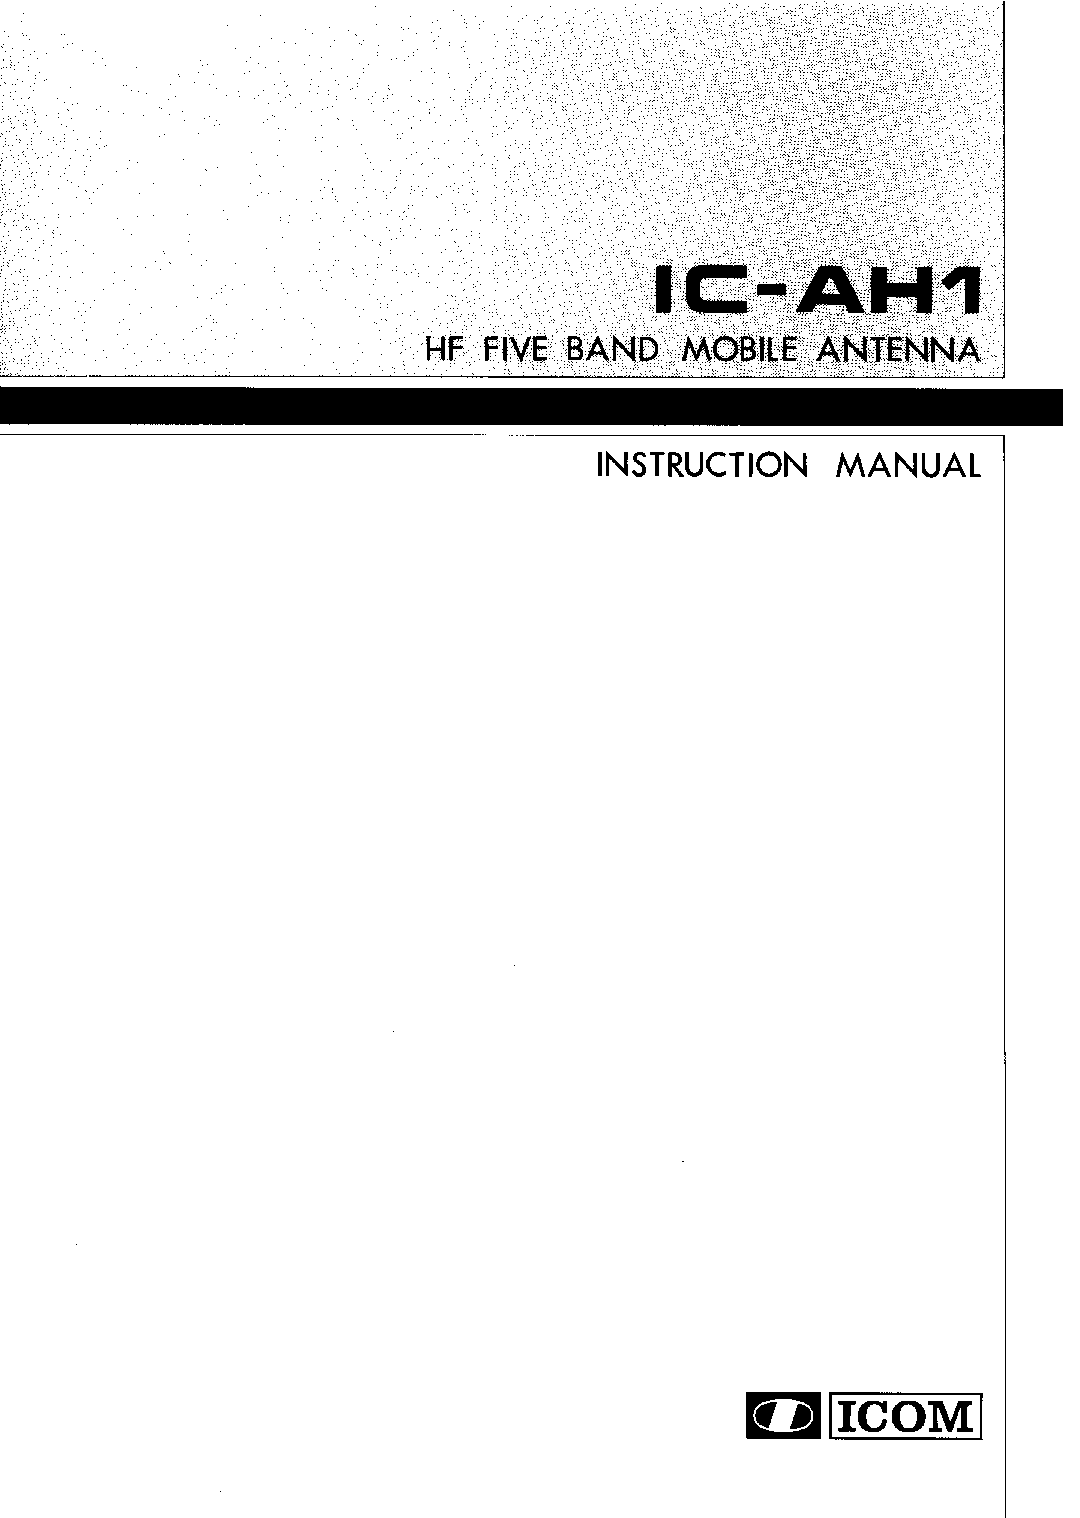 Icom IC-AH1 User Manual